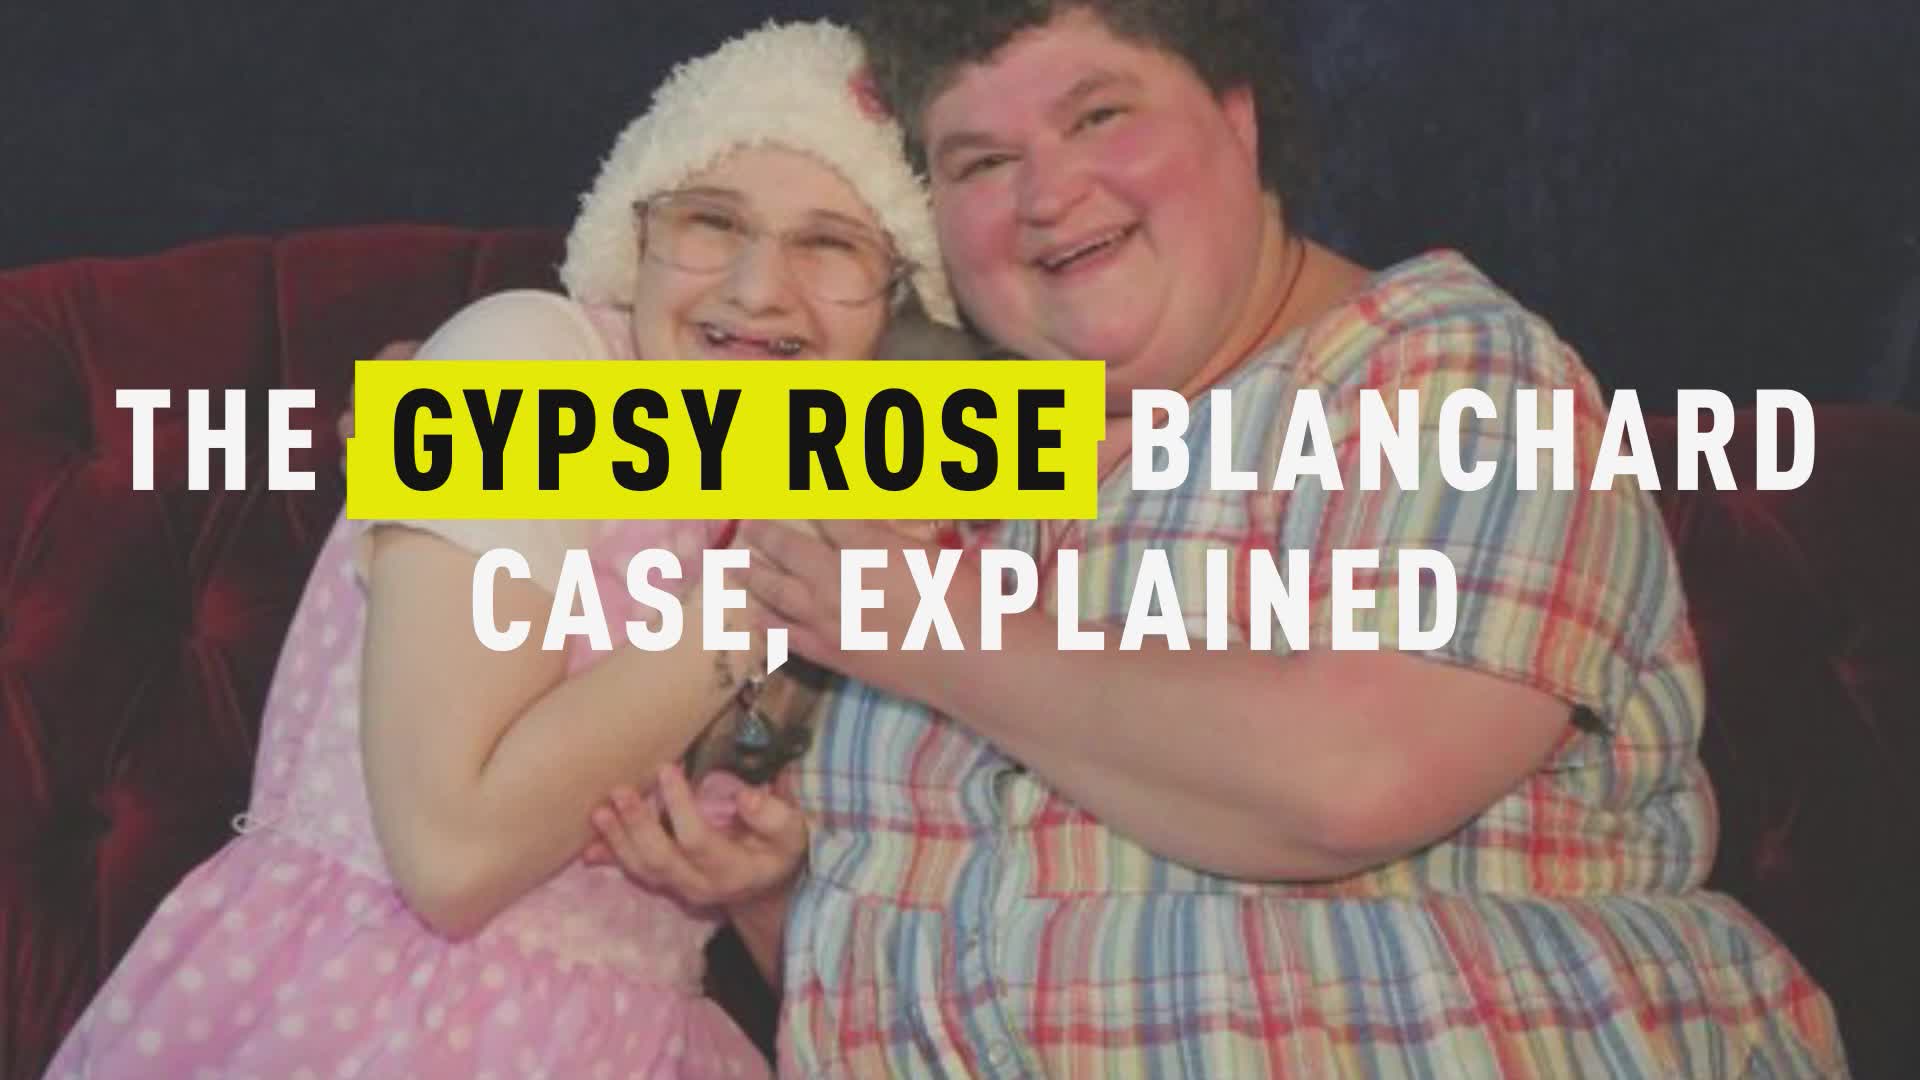 The Gypsy Rose Blanchard Case, Explained